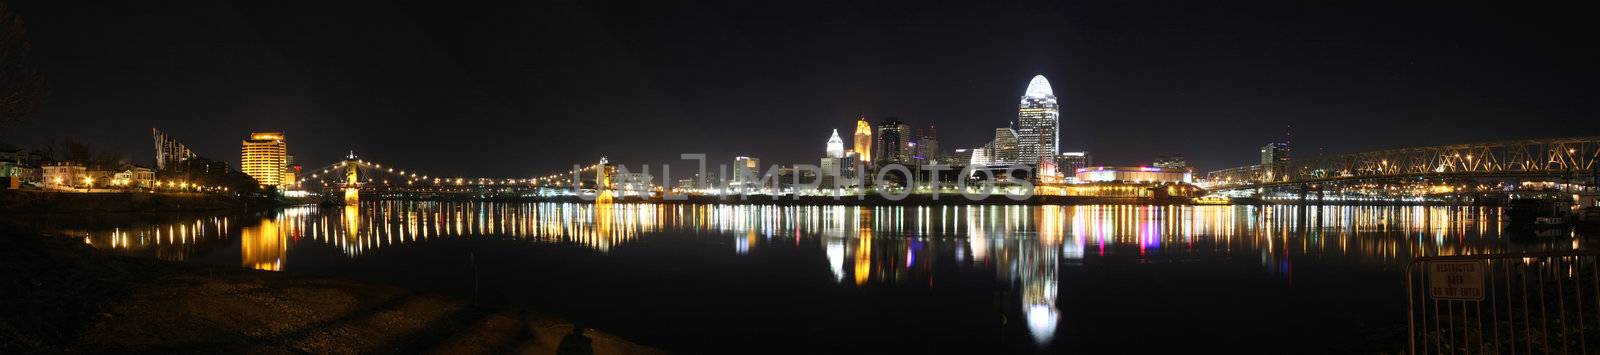 4am January 16 2012, Cincinnati Ohio skyline, panorama as seen from the Newport Kentucky riverbank